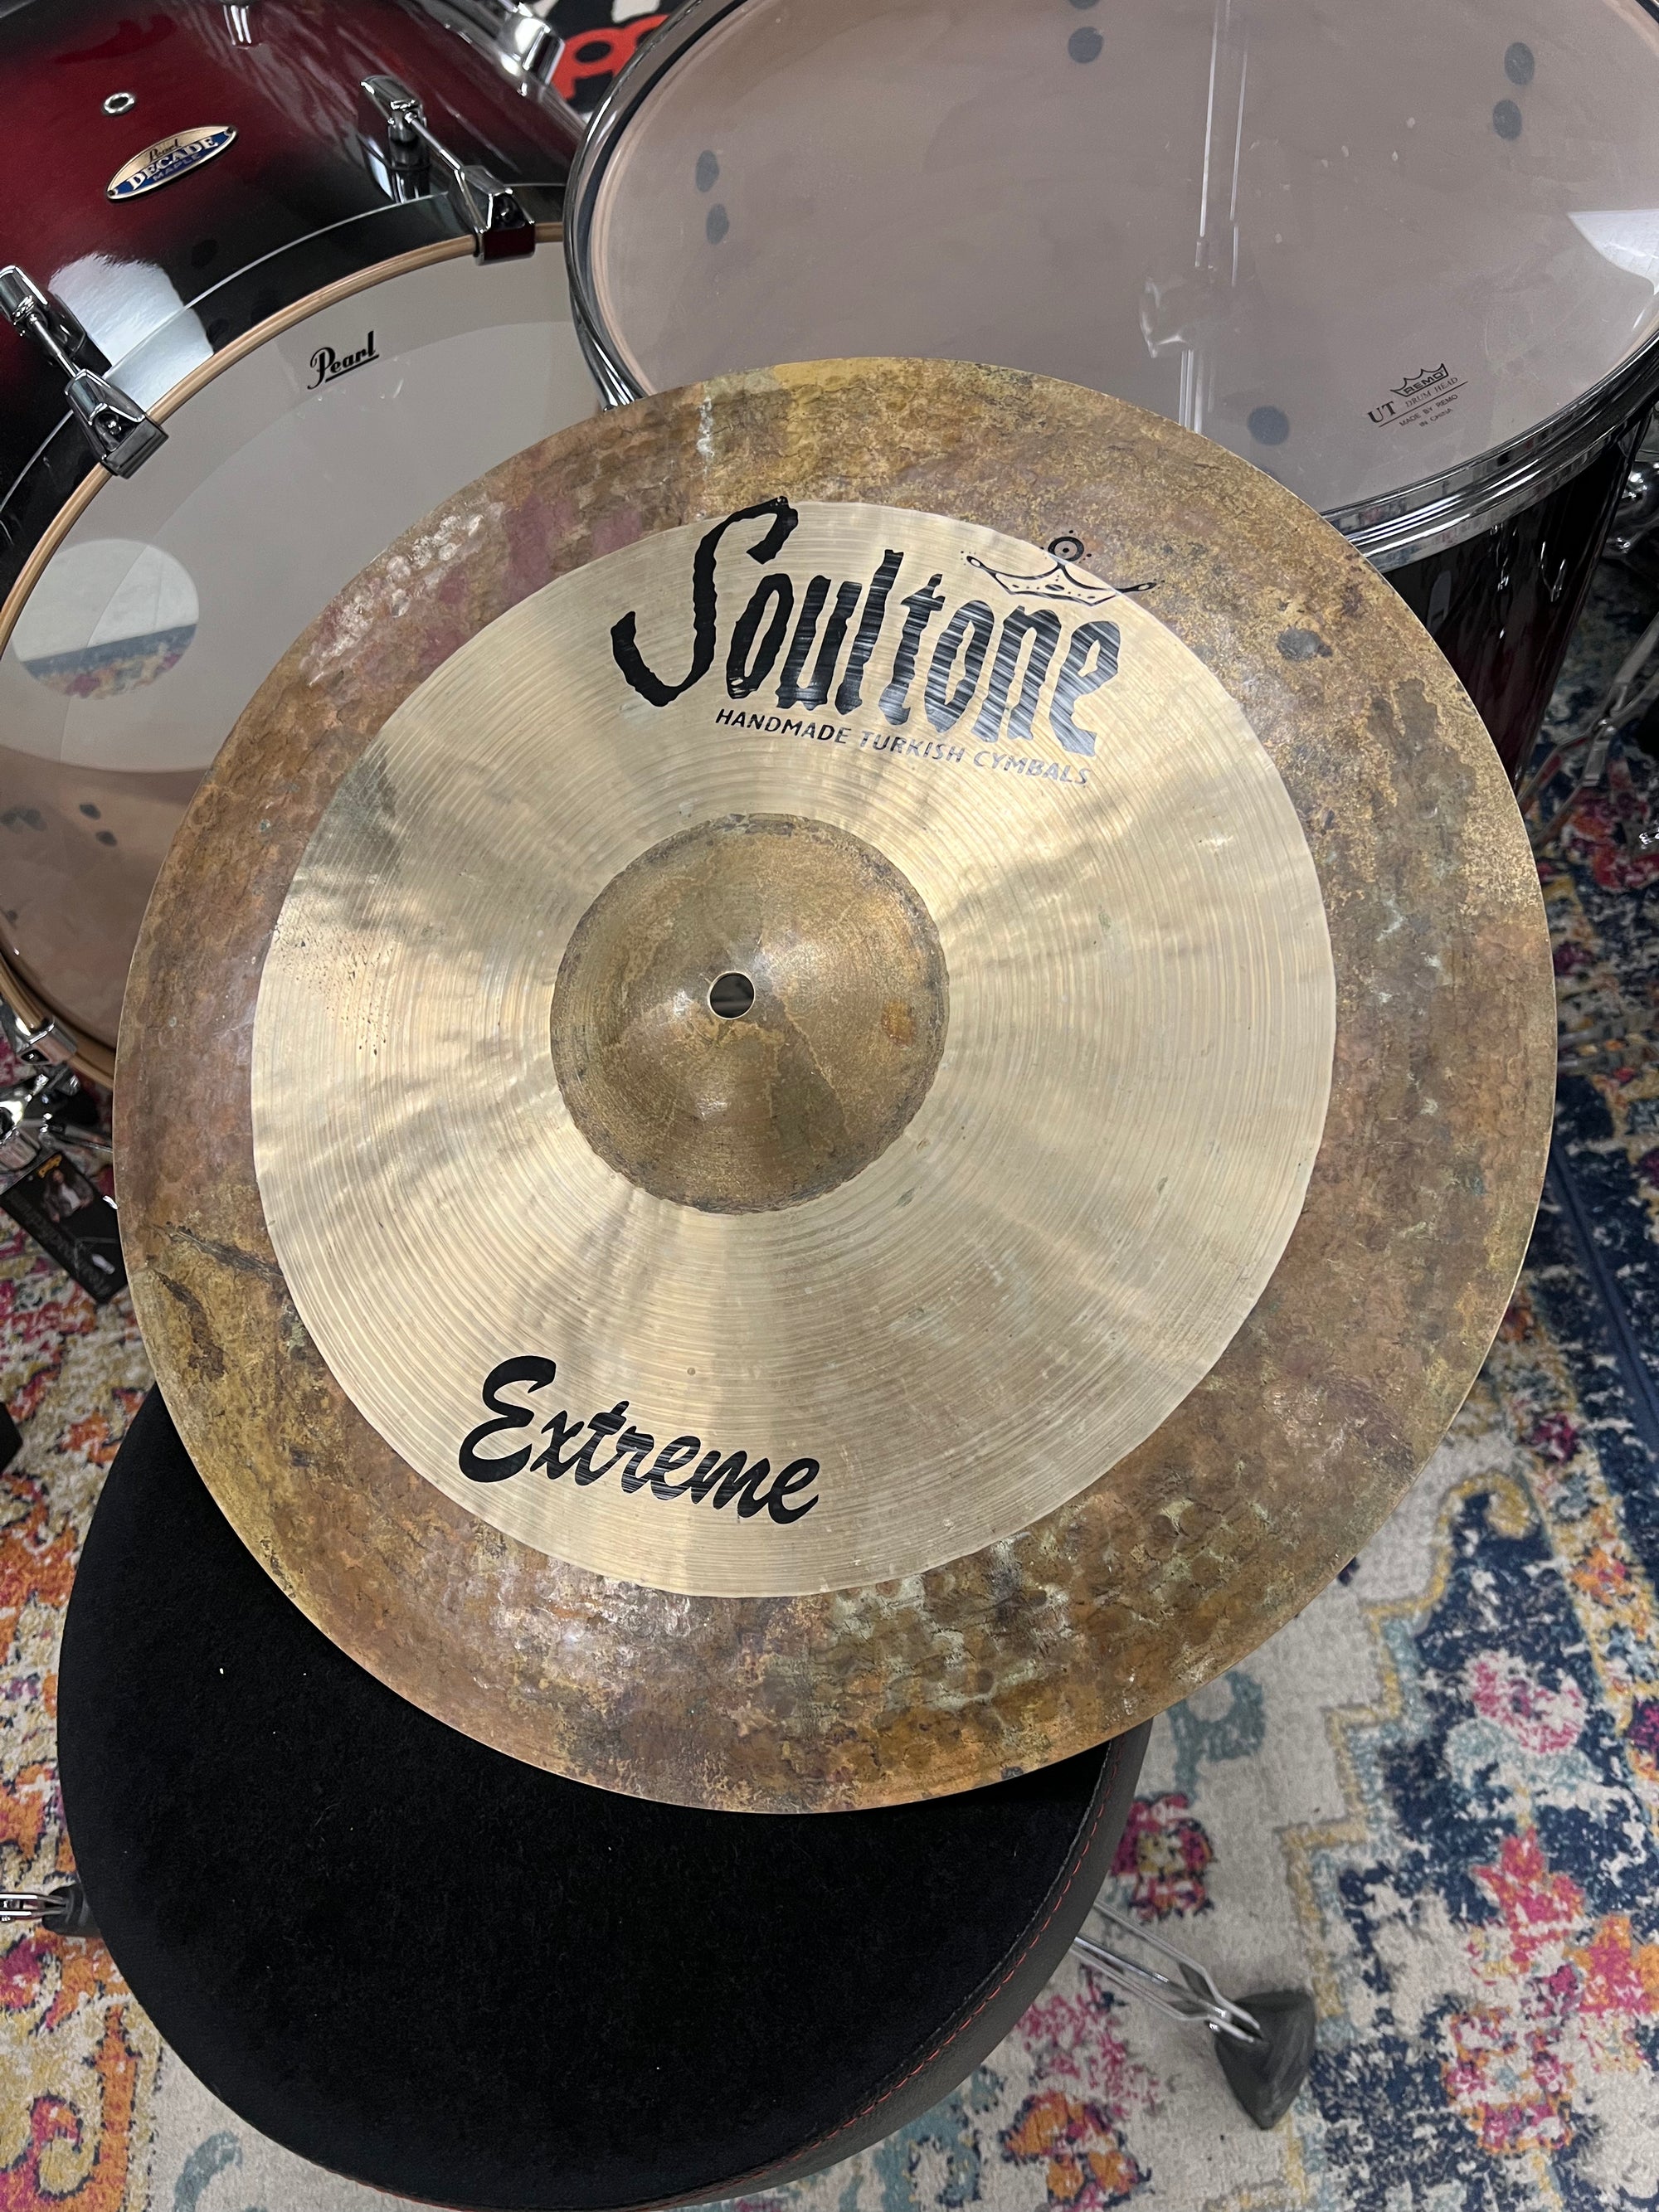 Soultone 18” Extreme crash